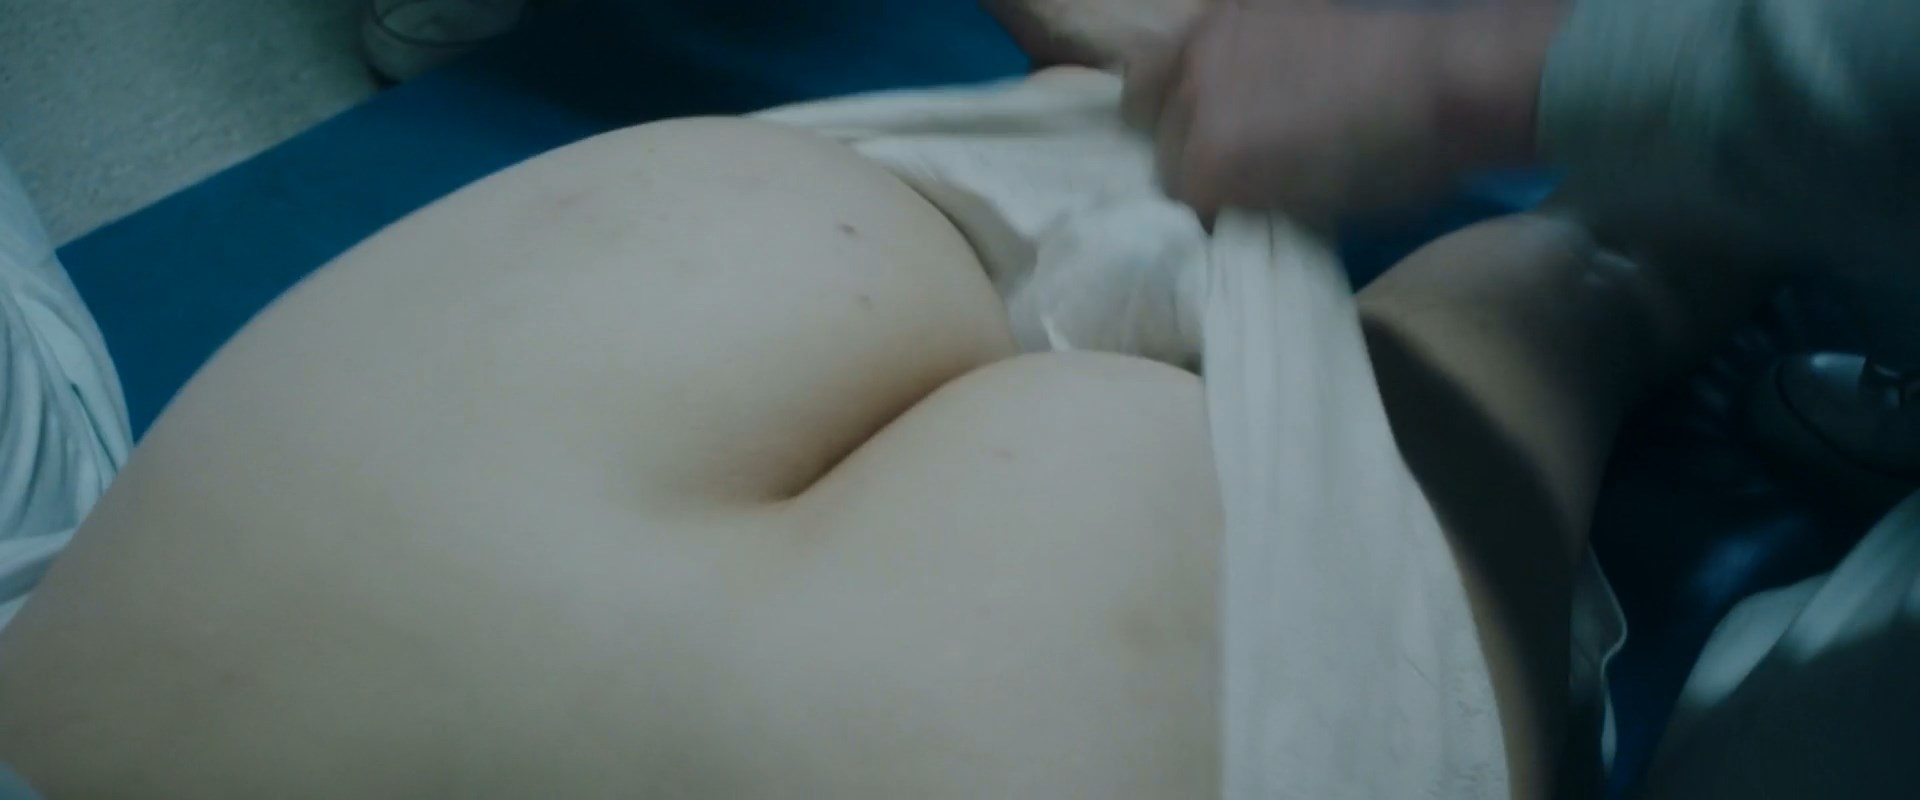 Helena bonham carter boobs